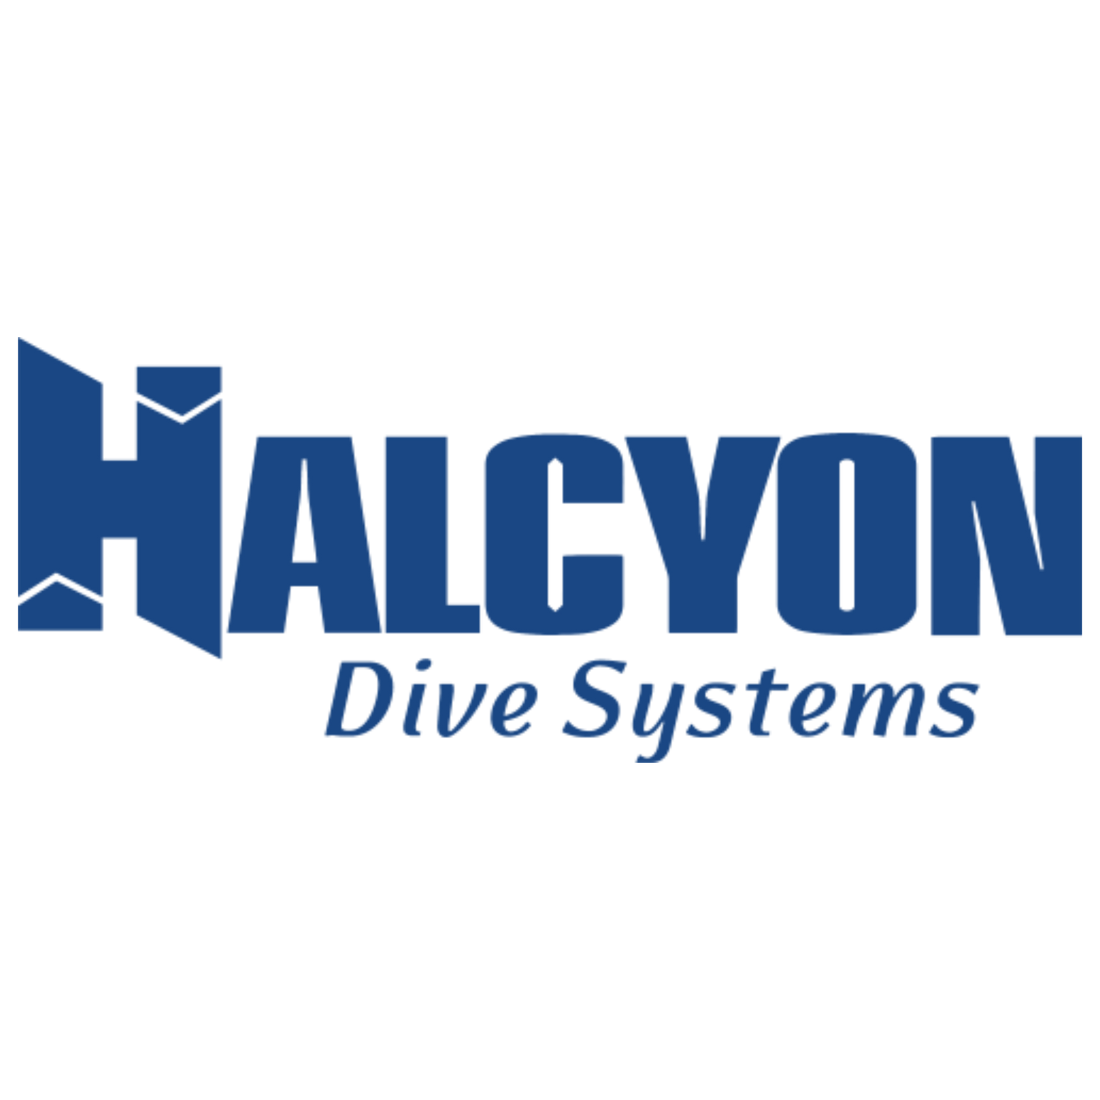  Halcyon